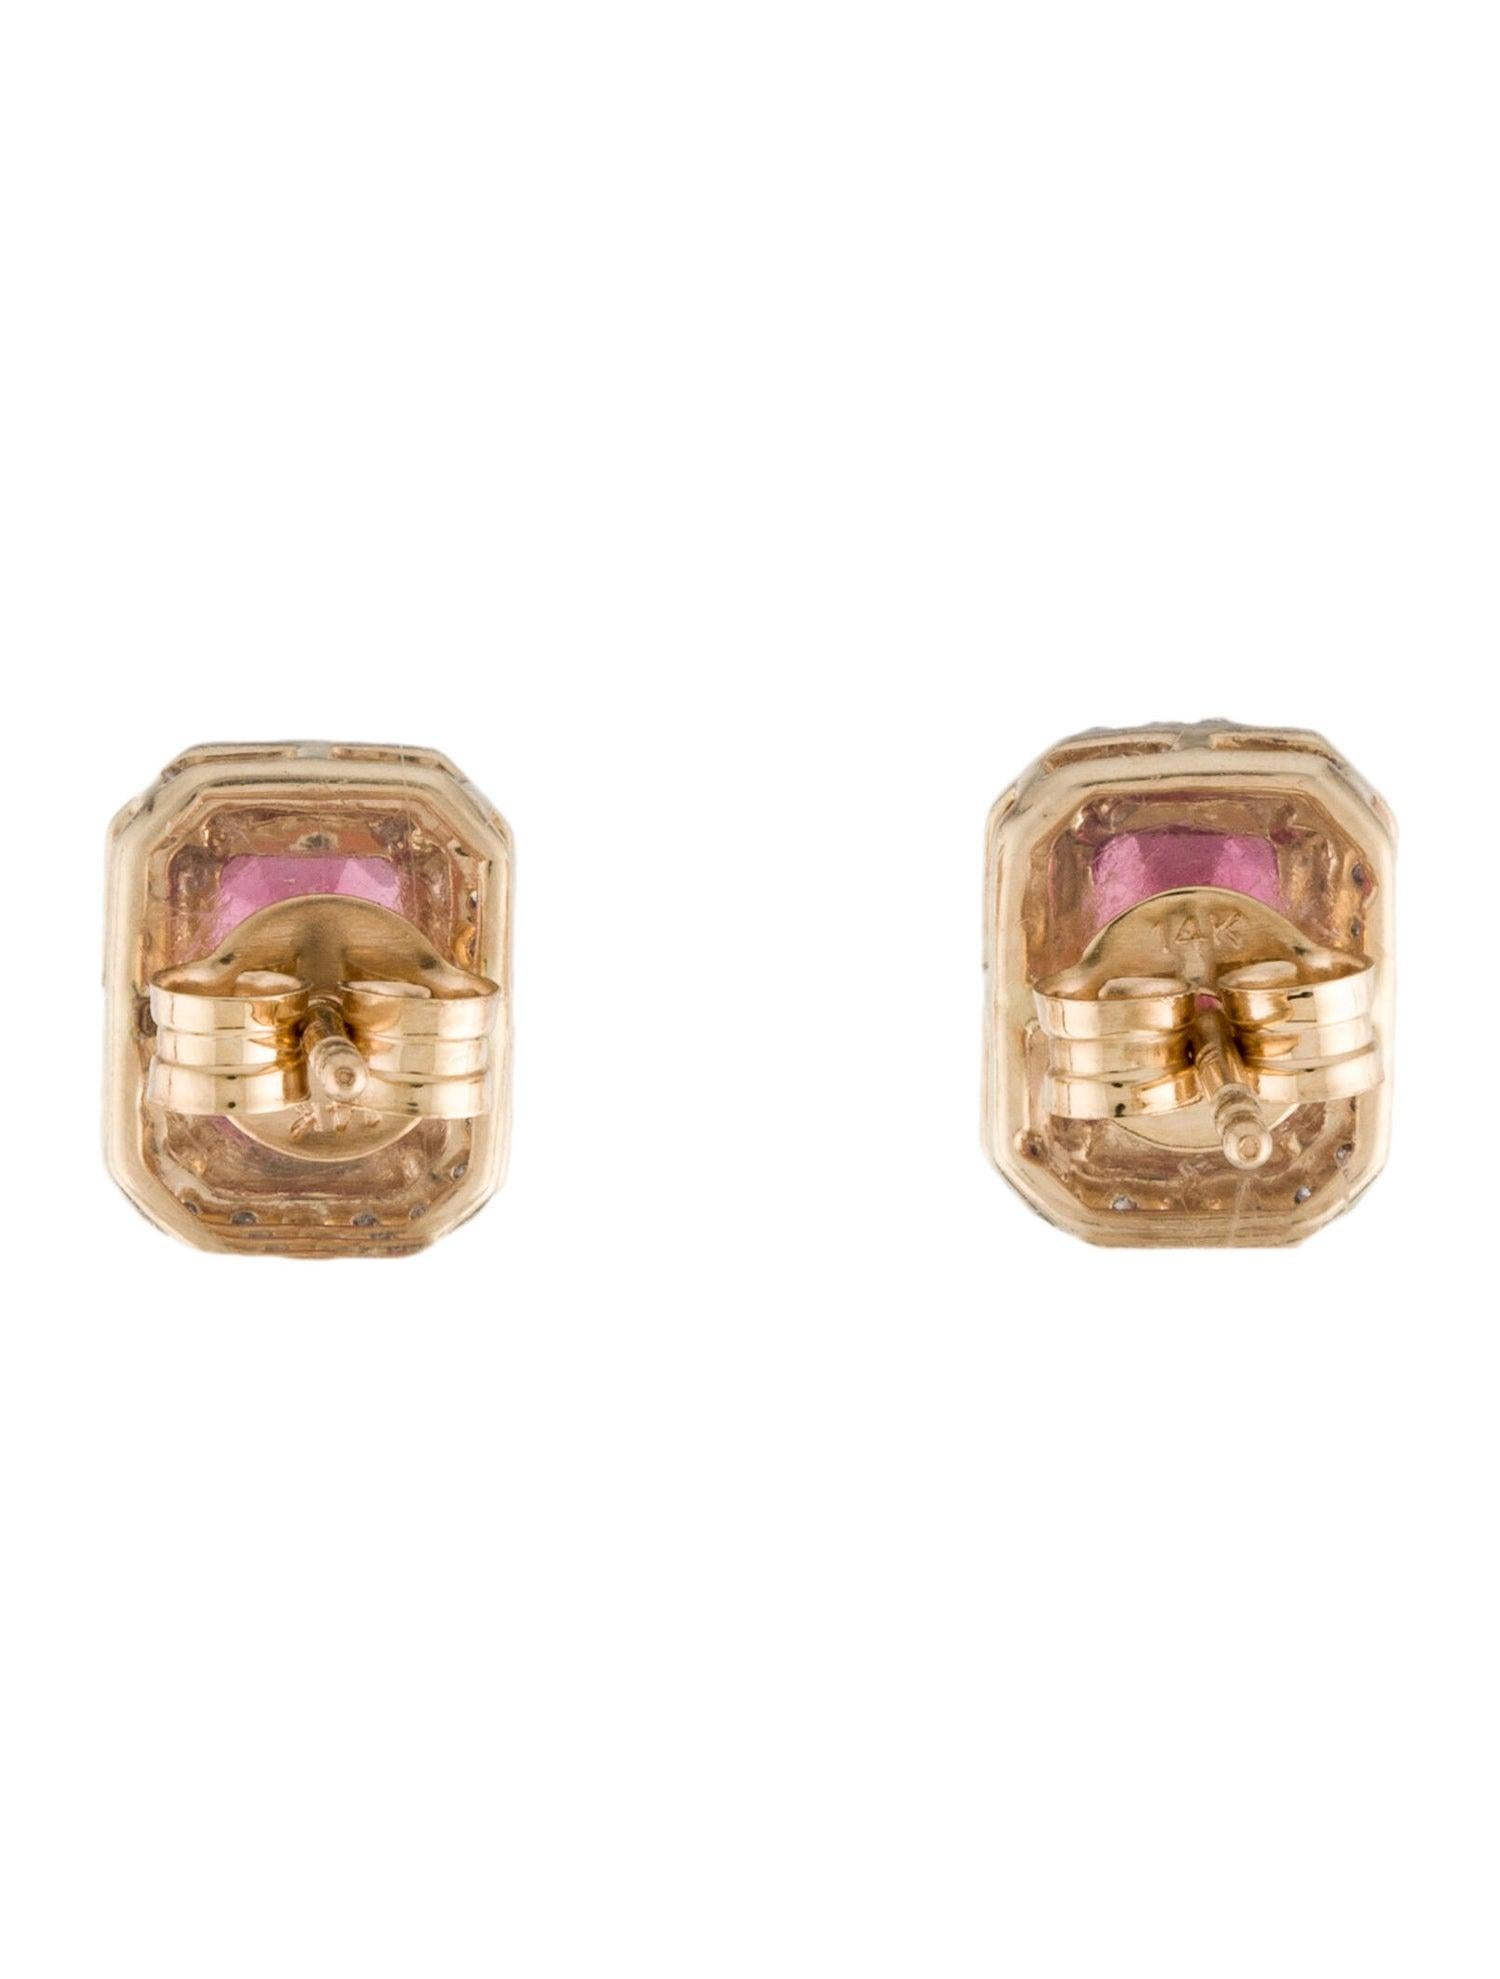 Brilliant Cut Gorgeous 14K 2.12ctw Tourmaline Studs - Stunning Gemstone Earrings For Sale